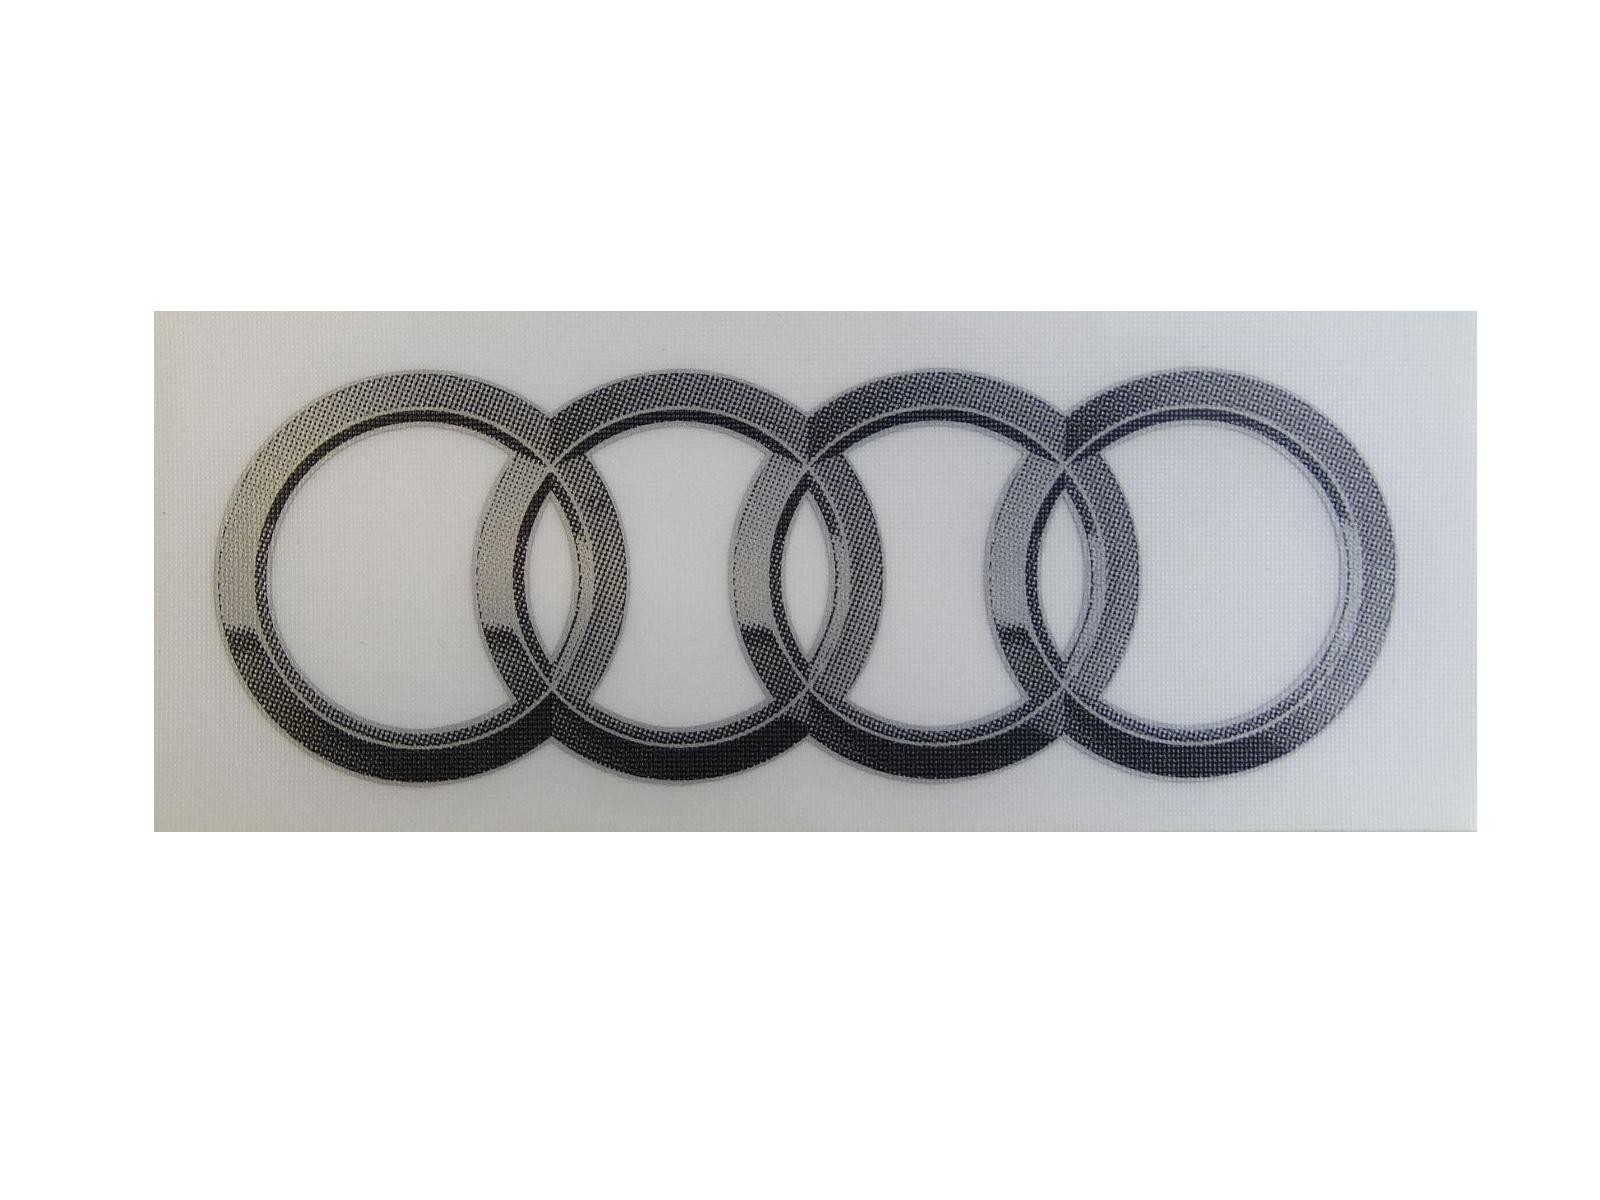  Original Audi Aufkleber Ringe Emblem Logo selbstklebend 